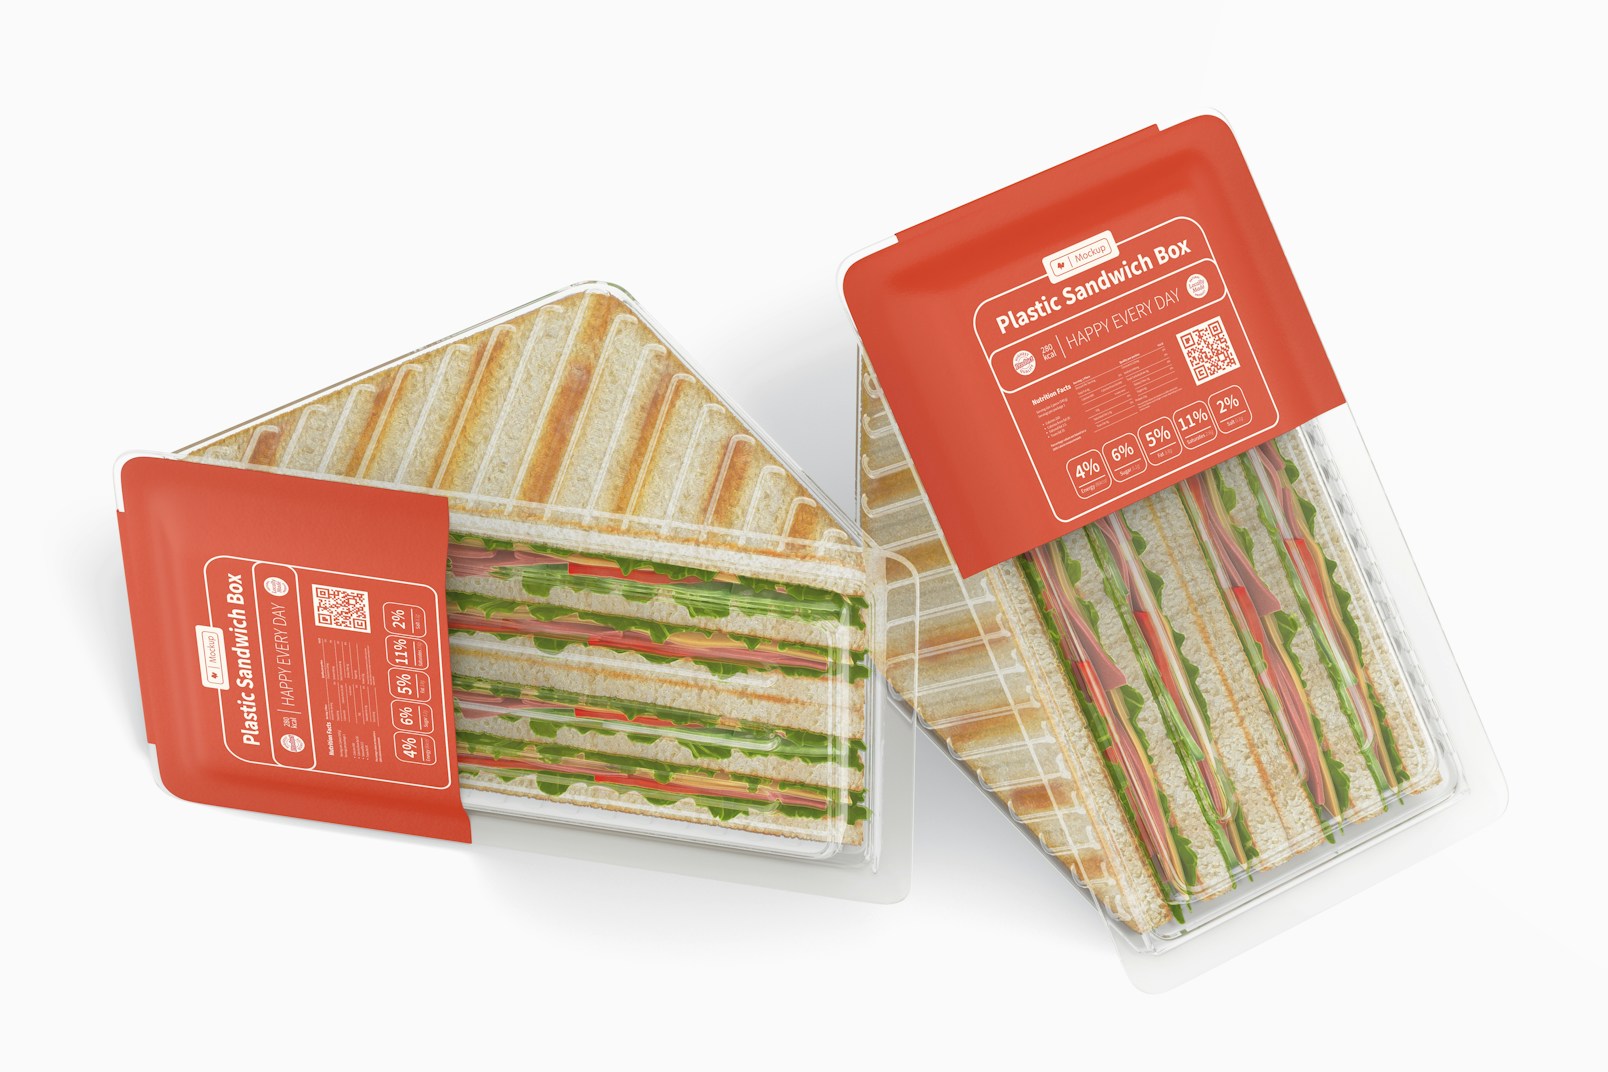 Plastic Sandwich Boxes Mockup